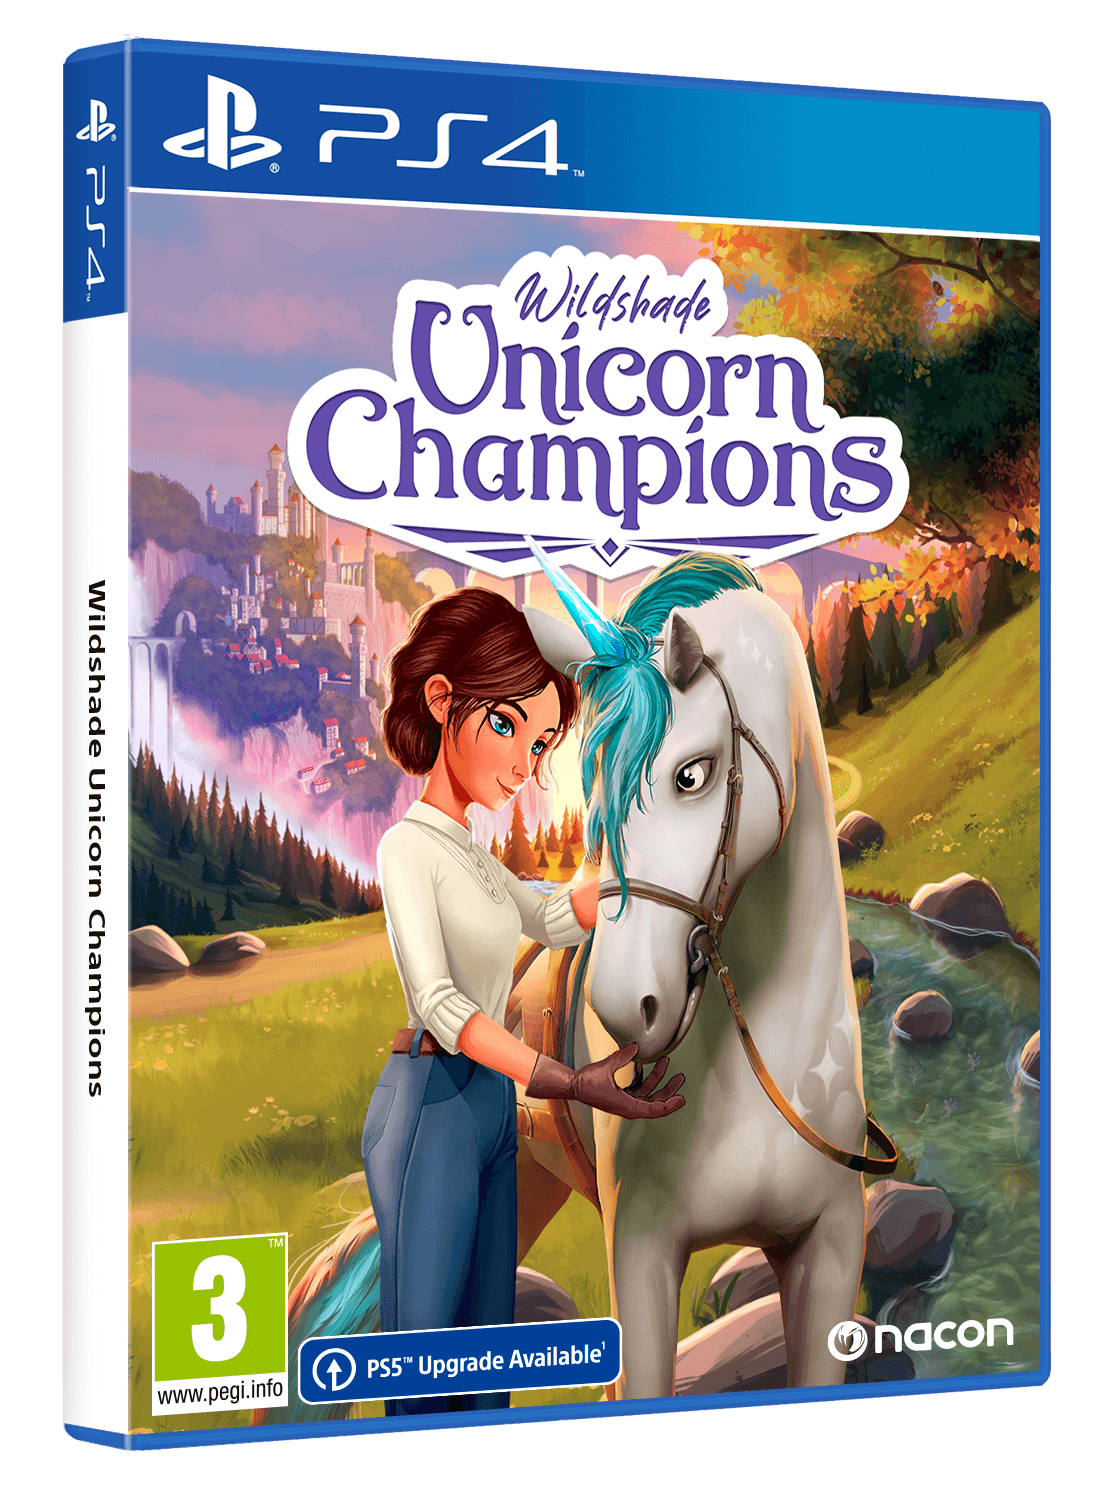 PlayStation 4 - Wildshade: Unicorn Champions - Want a New Gadget